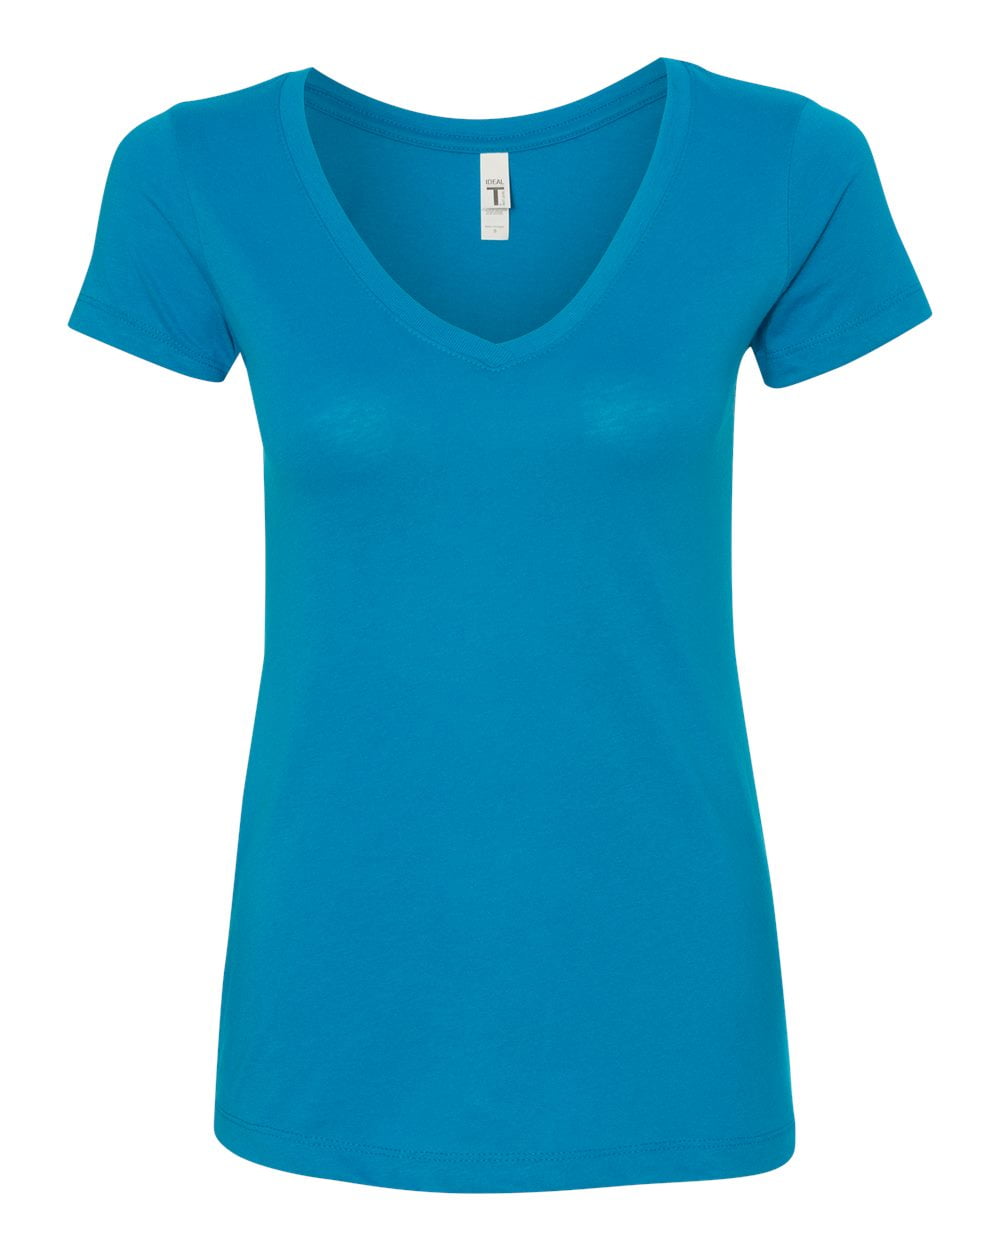 Next Level - Women's Ideal V-Neck T-Shirt - 1540 - Turquoise - Size: M ...